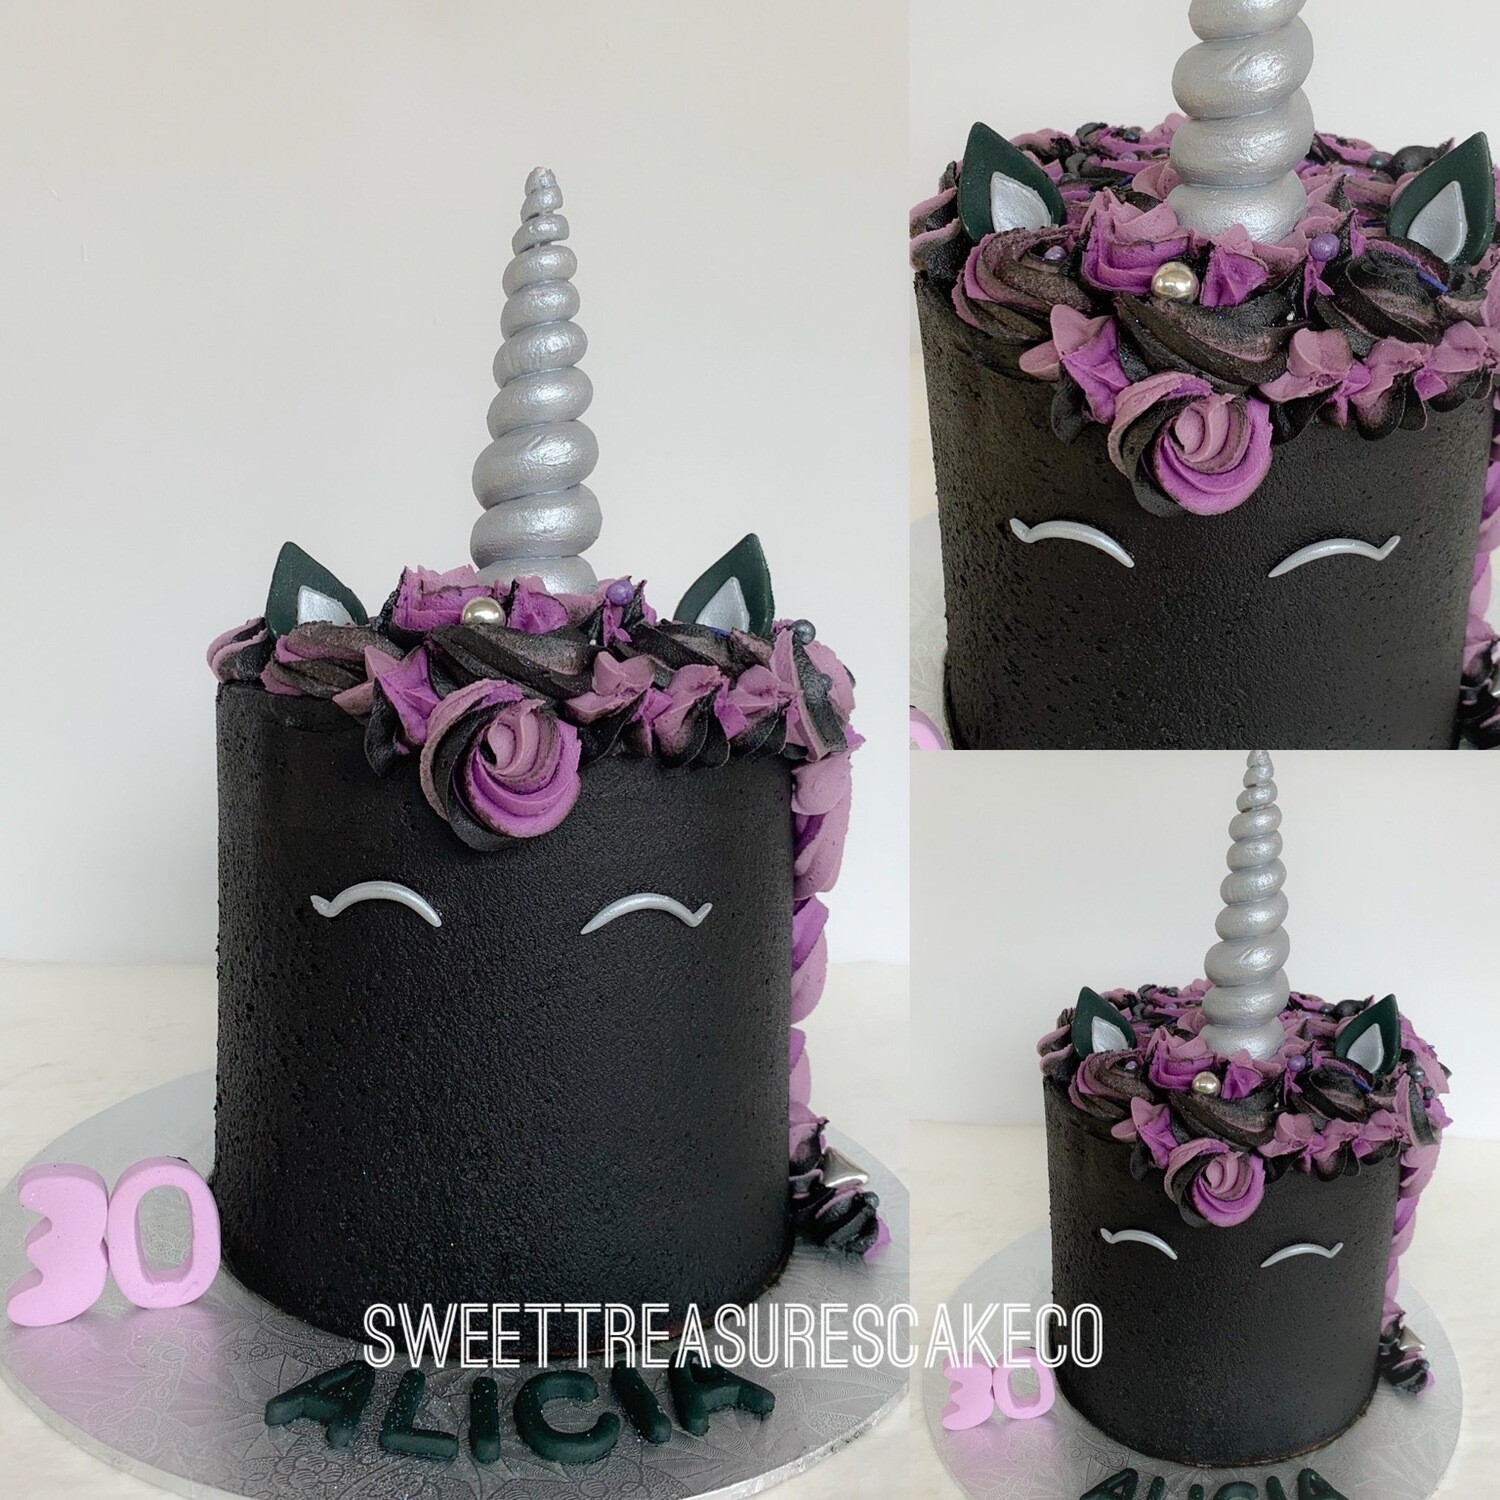 Unicorn Inspired Single tier cake